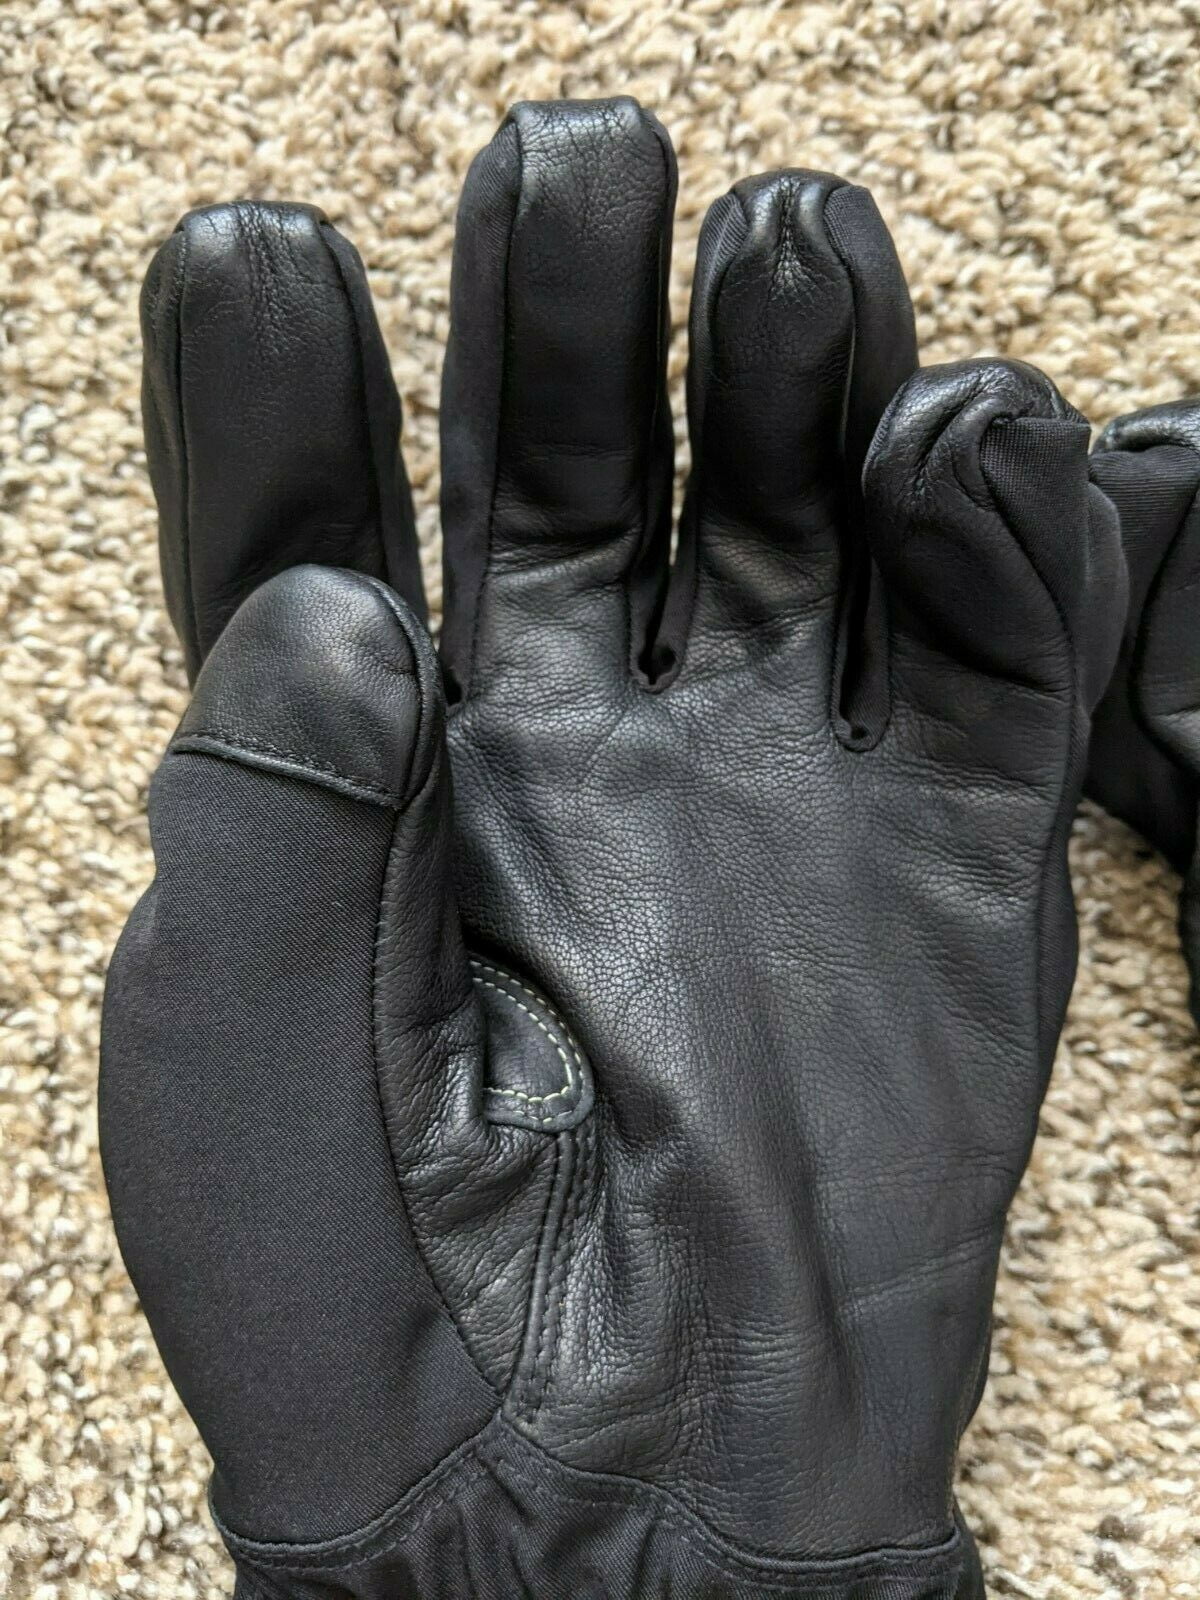 Black Diamond Enforcer Glove